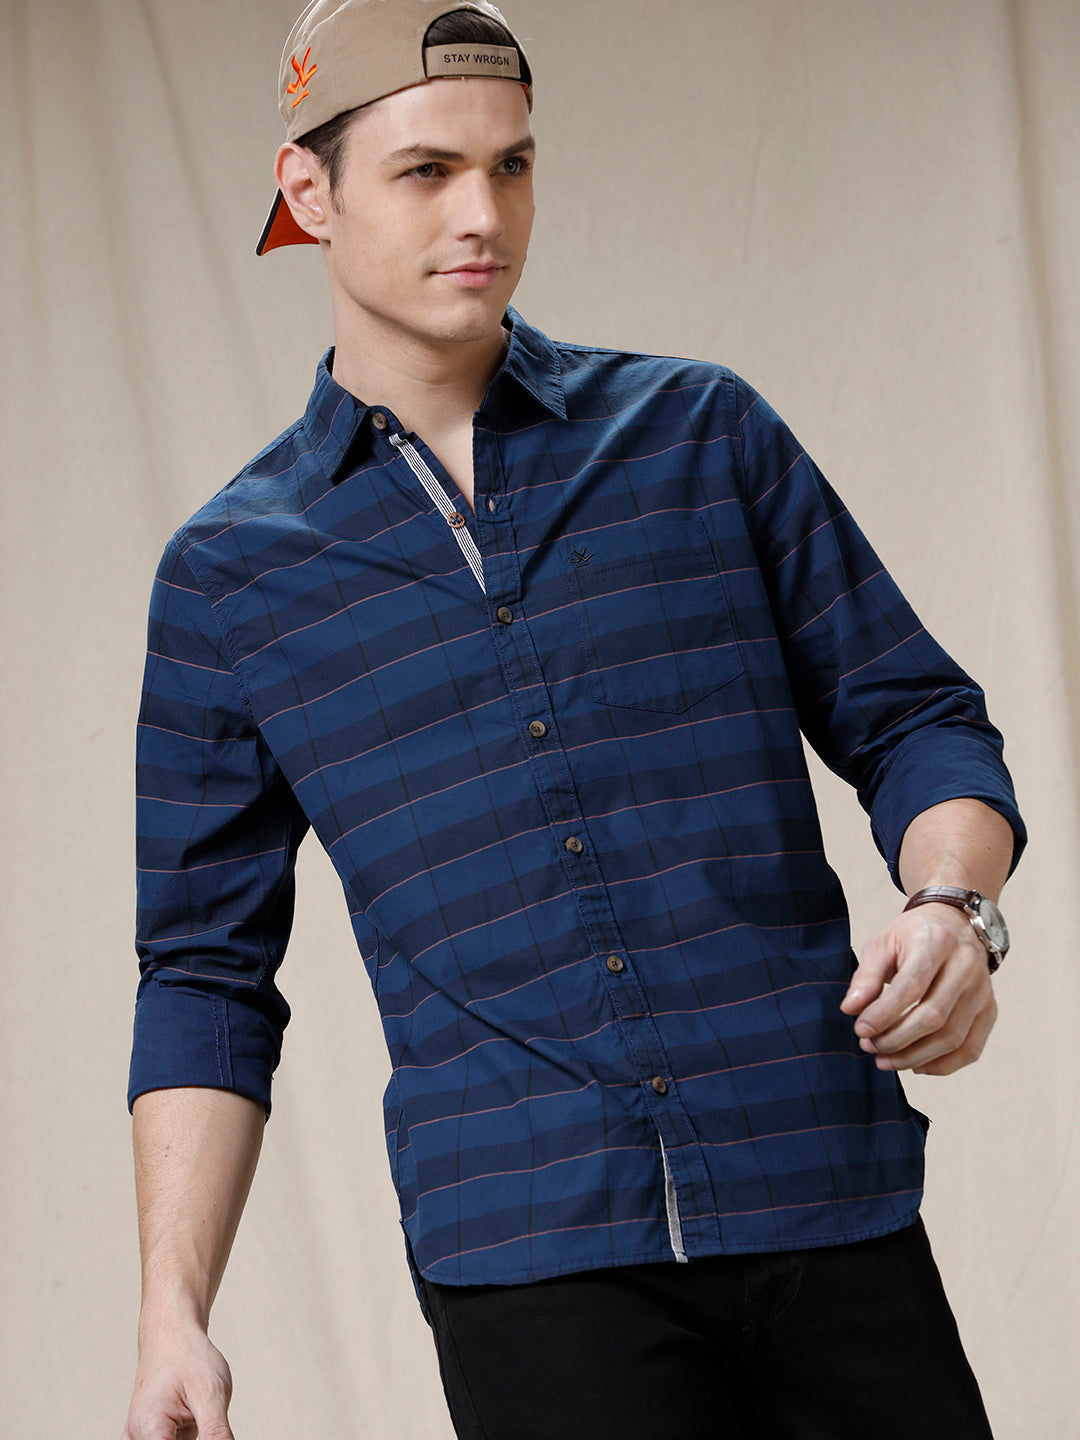 Navy Blue Striped Cotton Shirt